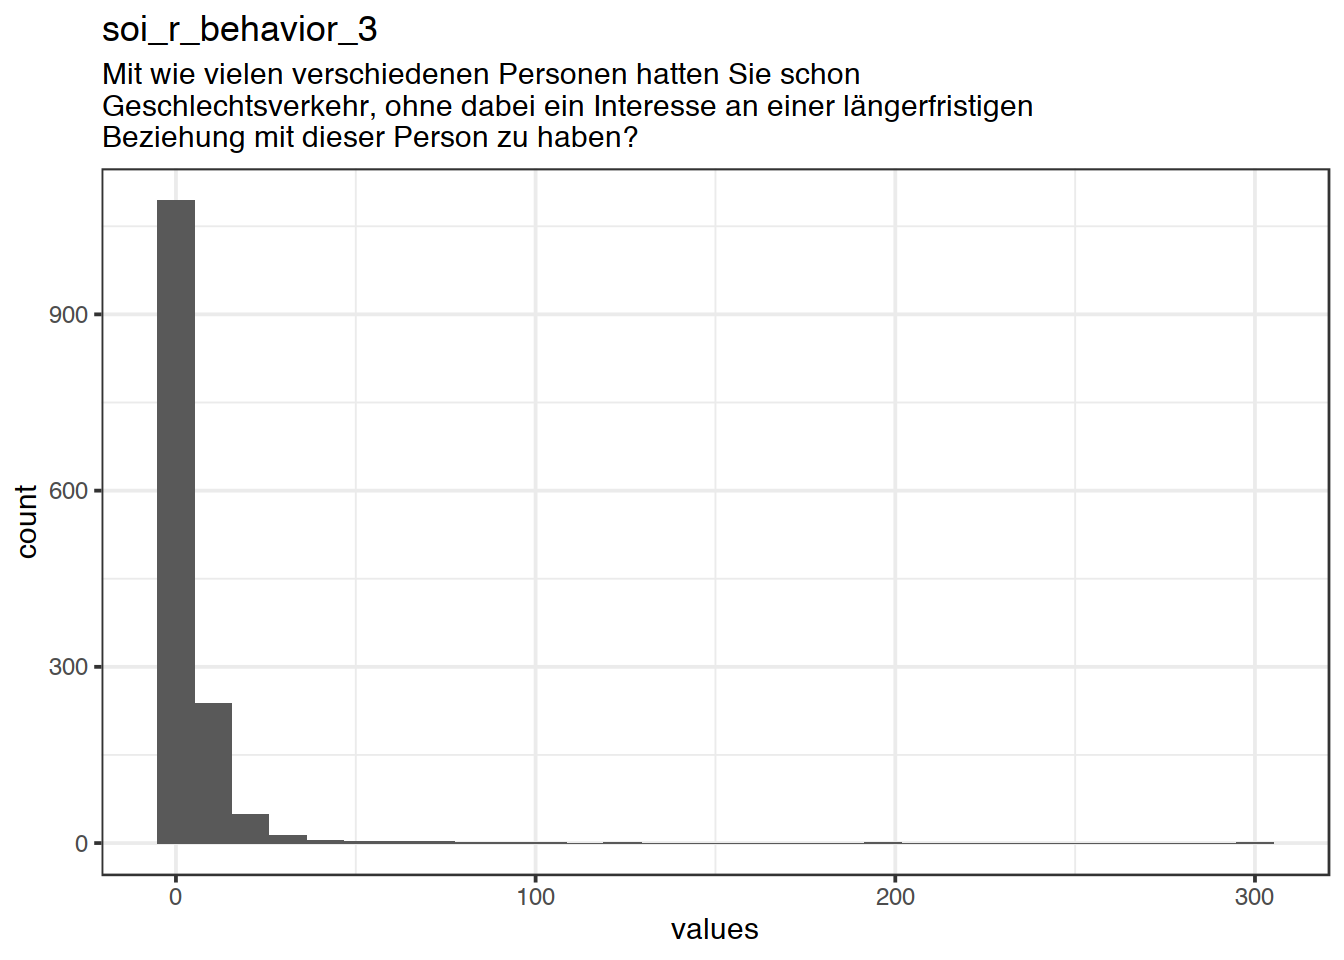 Distribution of values for soi_r_behavior_3